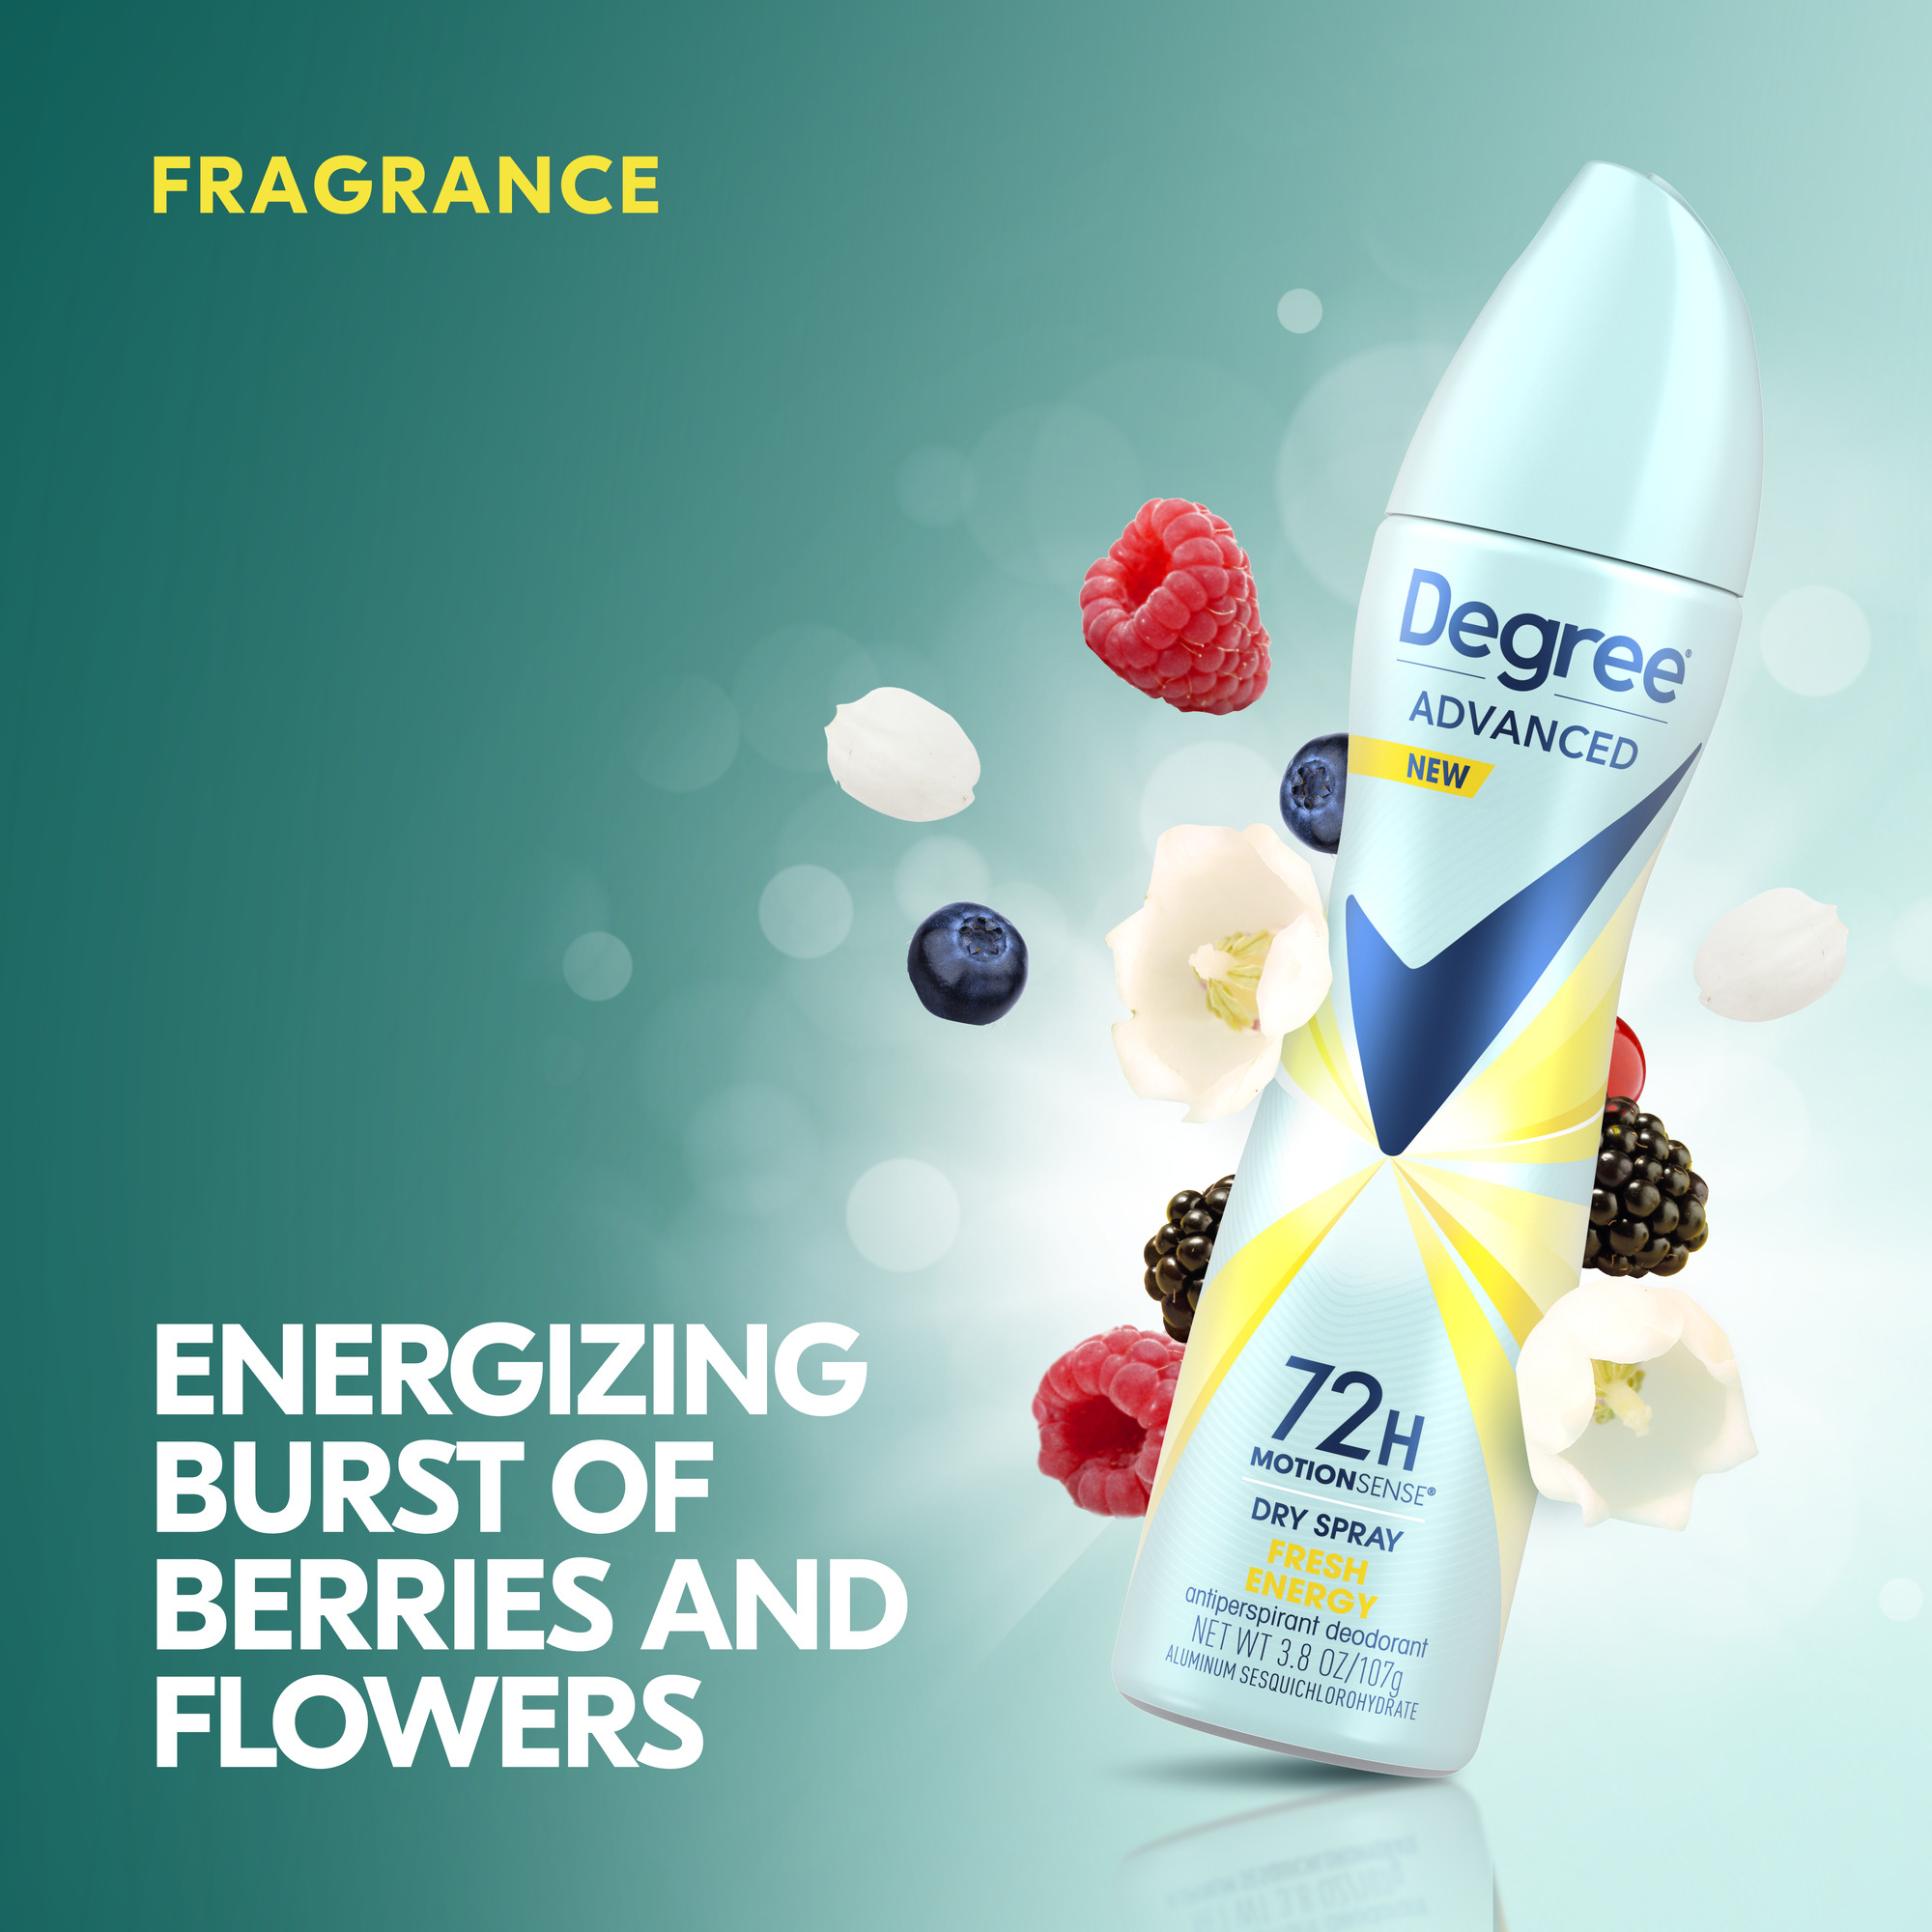 Degree Antiperspirant Deodorant Dry Spray Fresh Energy Deodorant for Women 3.8 oz - image 4 of 11